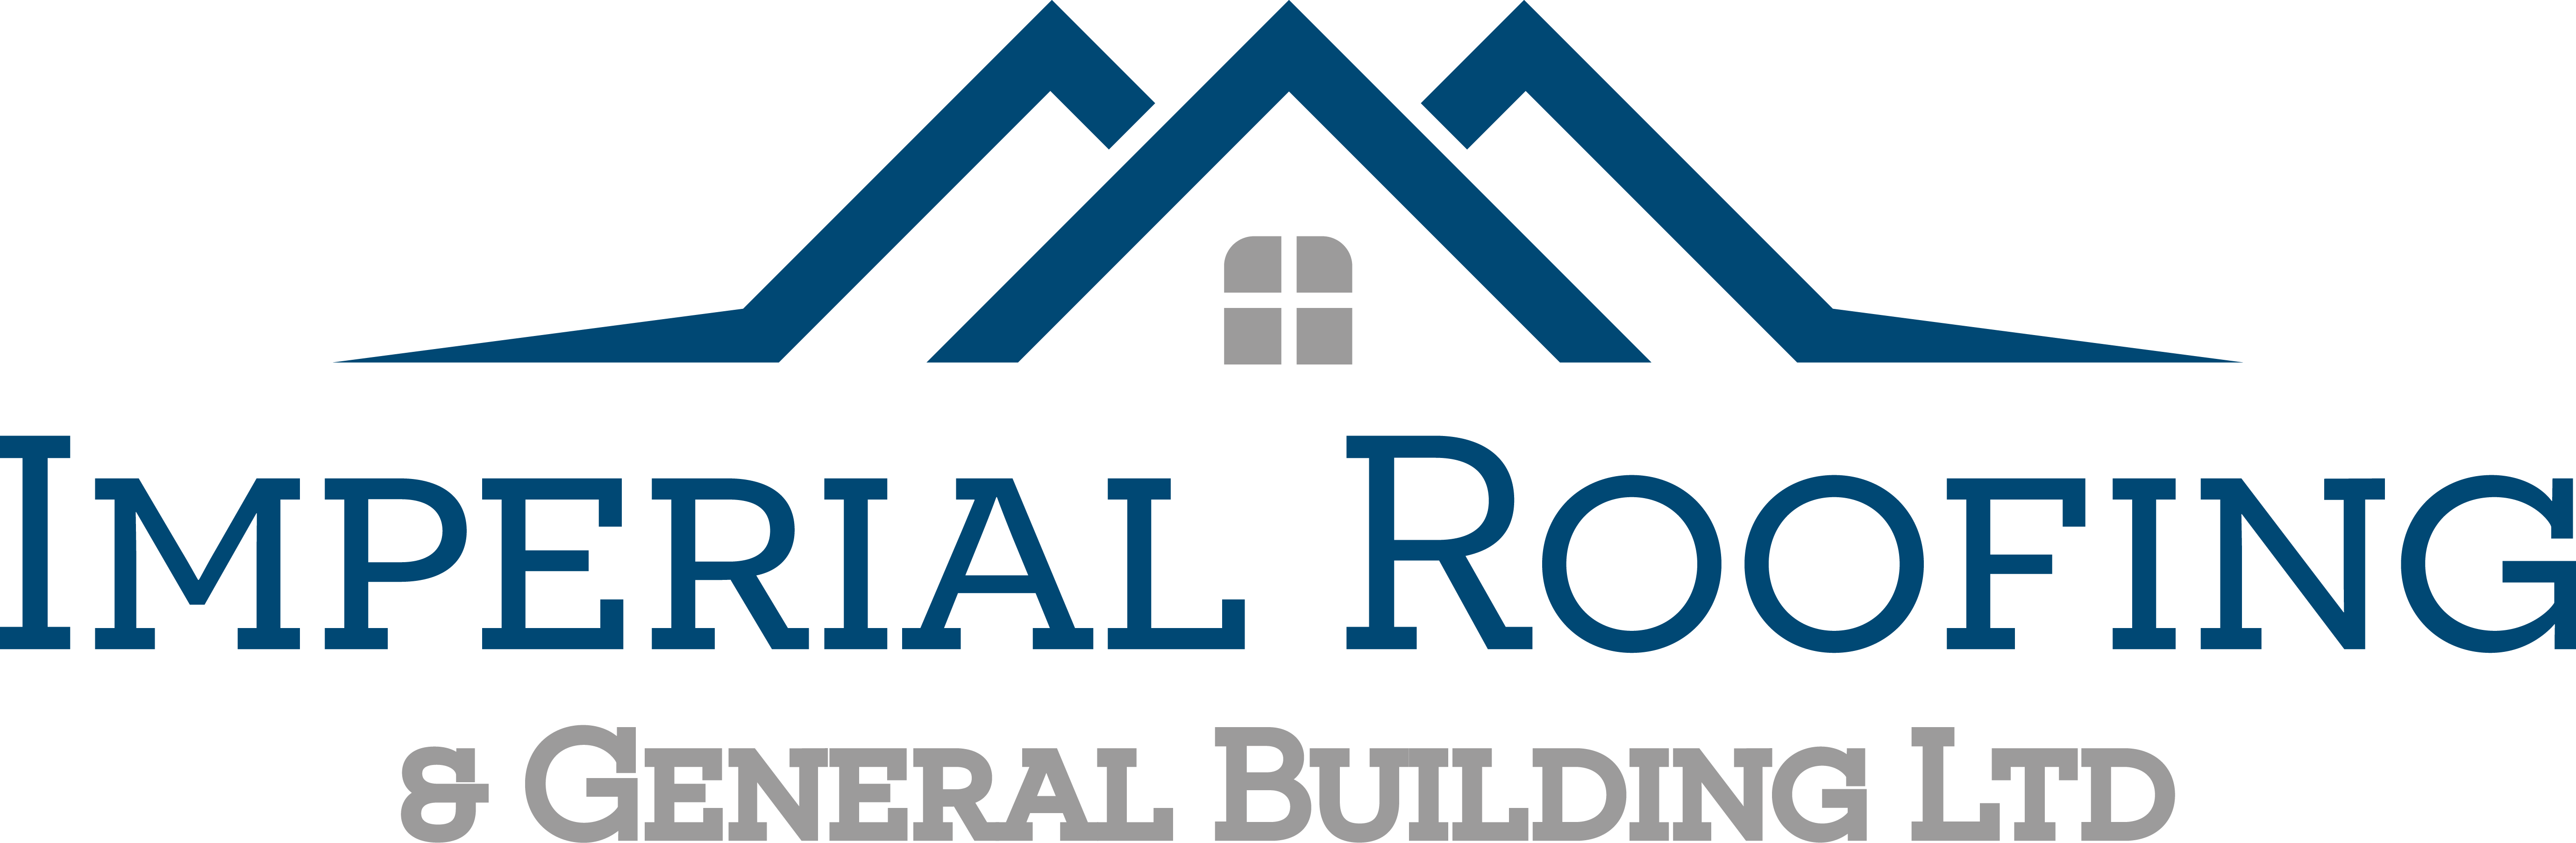 Imperial Roofing & General Building Ltd logo